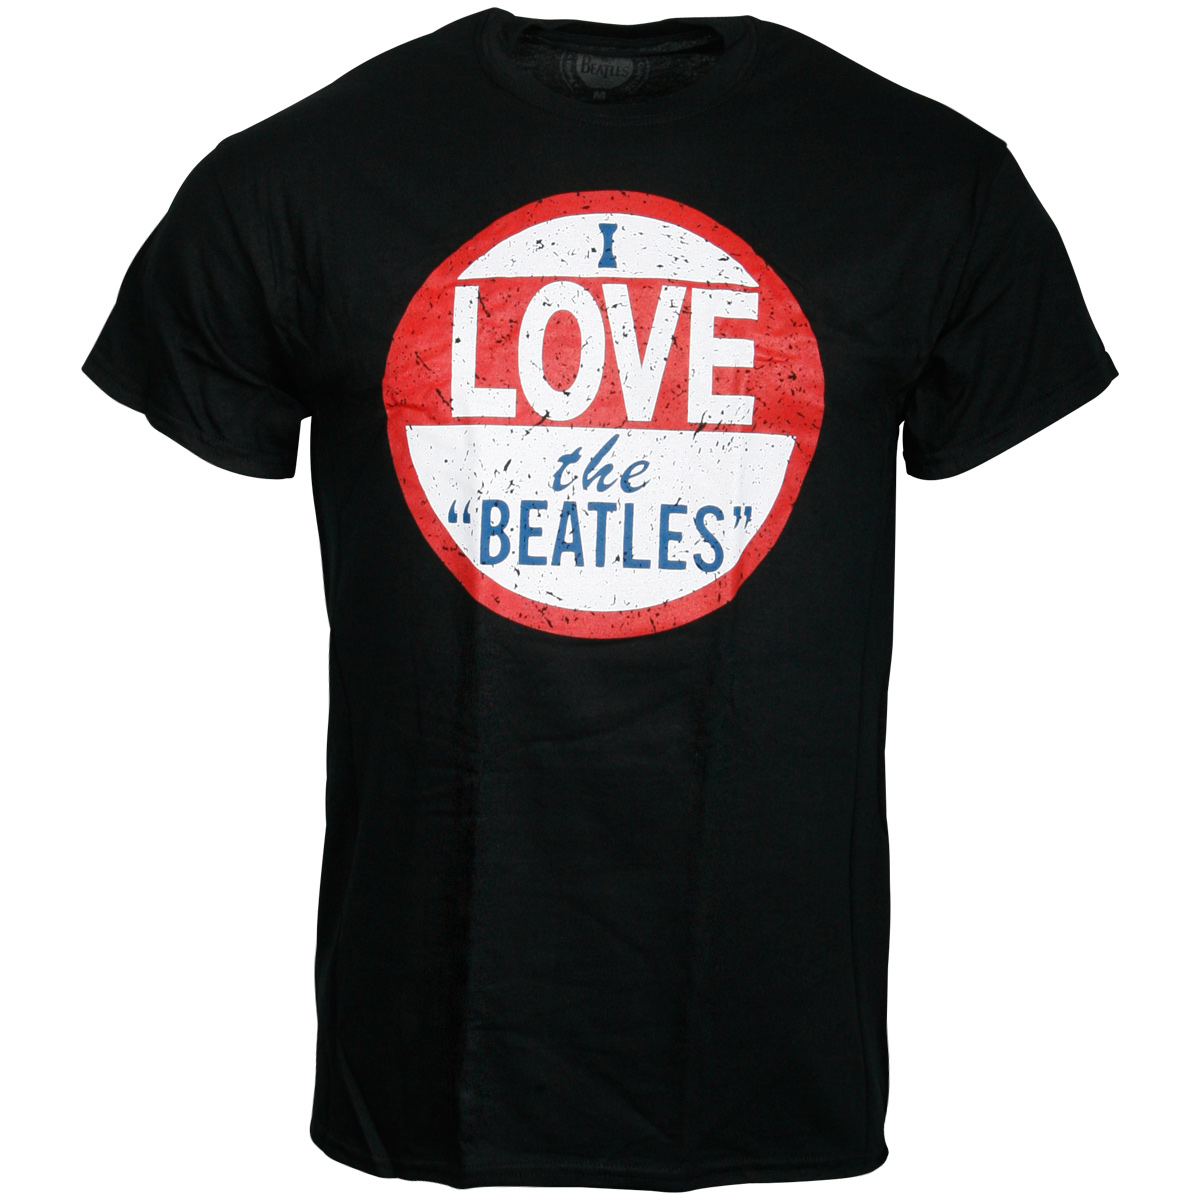 The Beatles - T-Shirt I Love The Beatles - schwarz